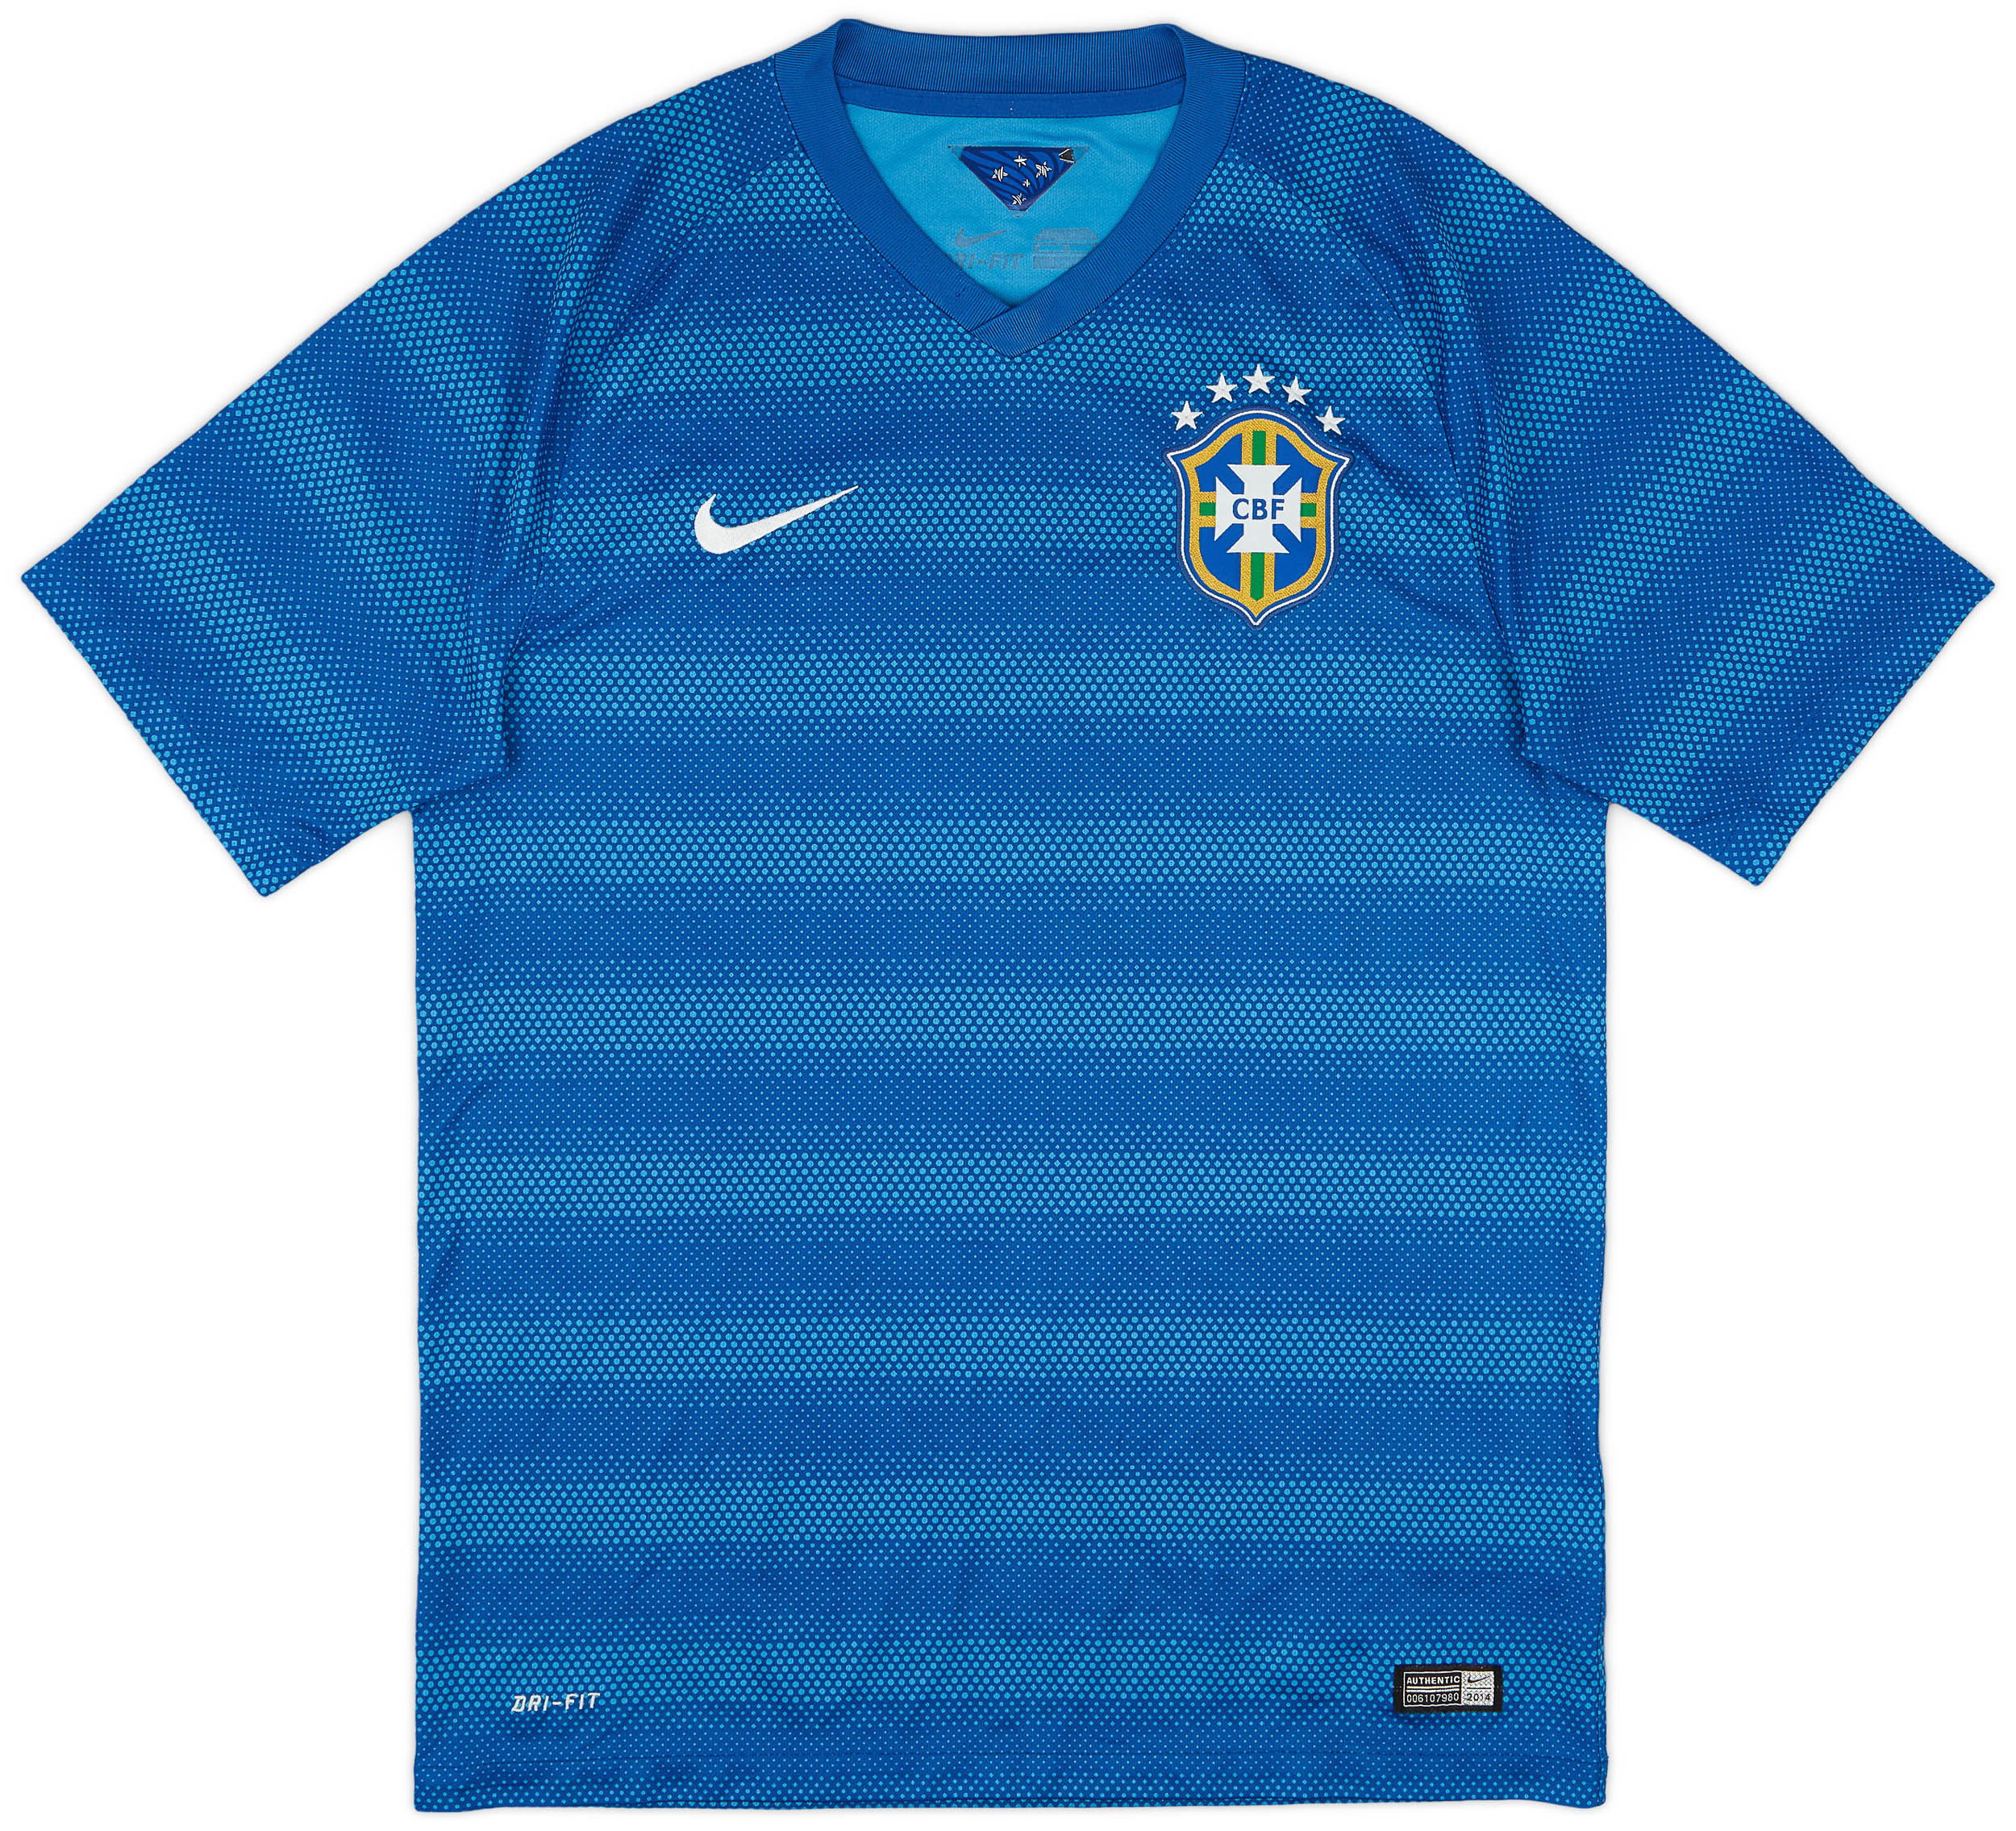 Brazil Visitante Camiseta de Fútbol 2018 - 2019.